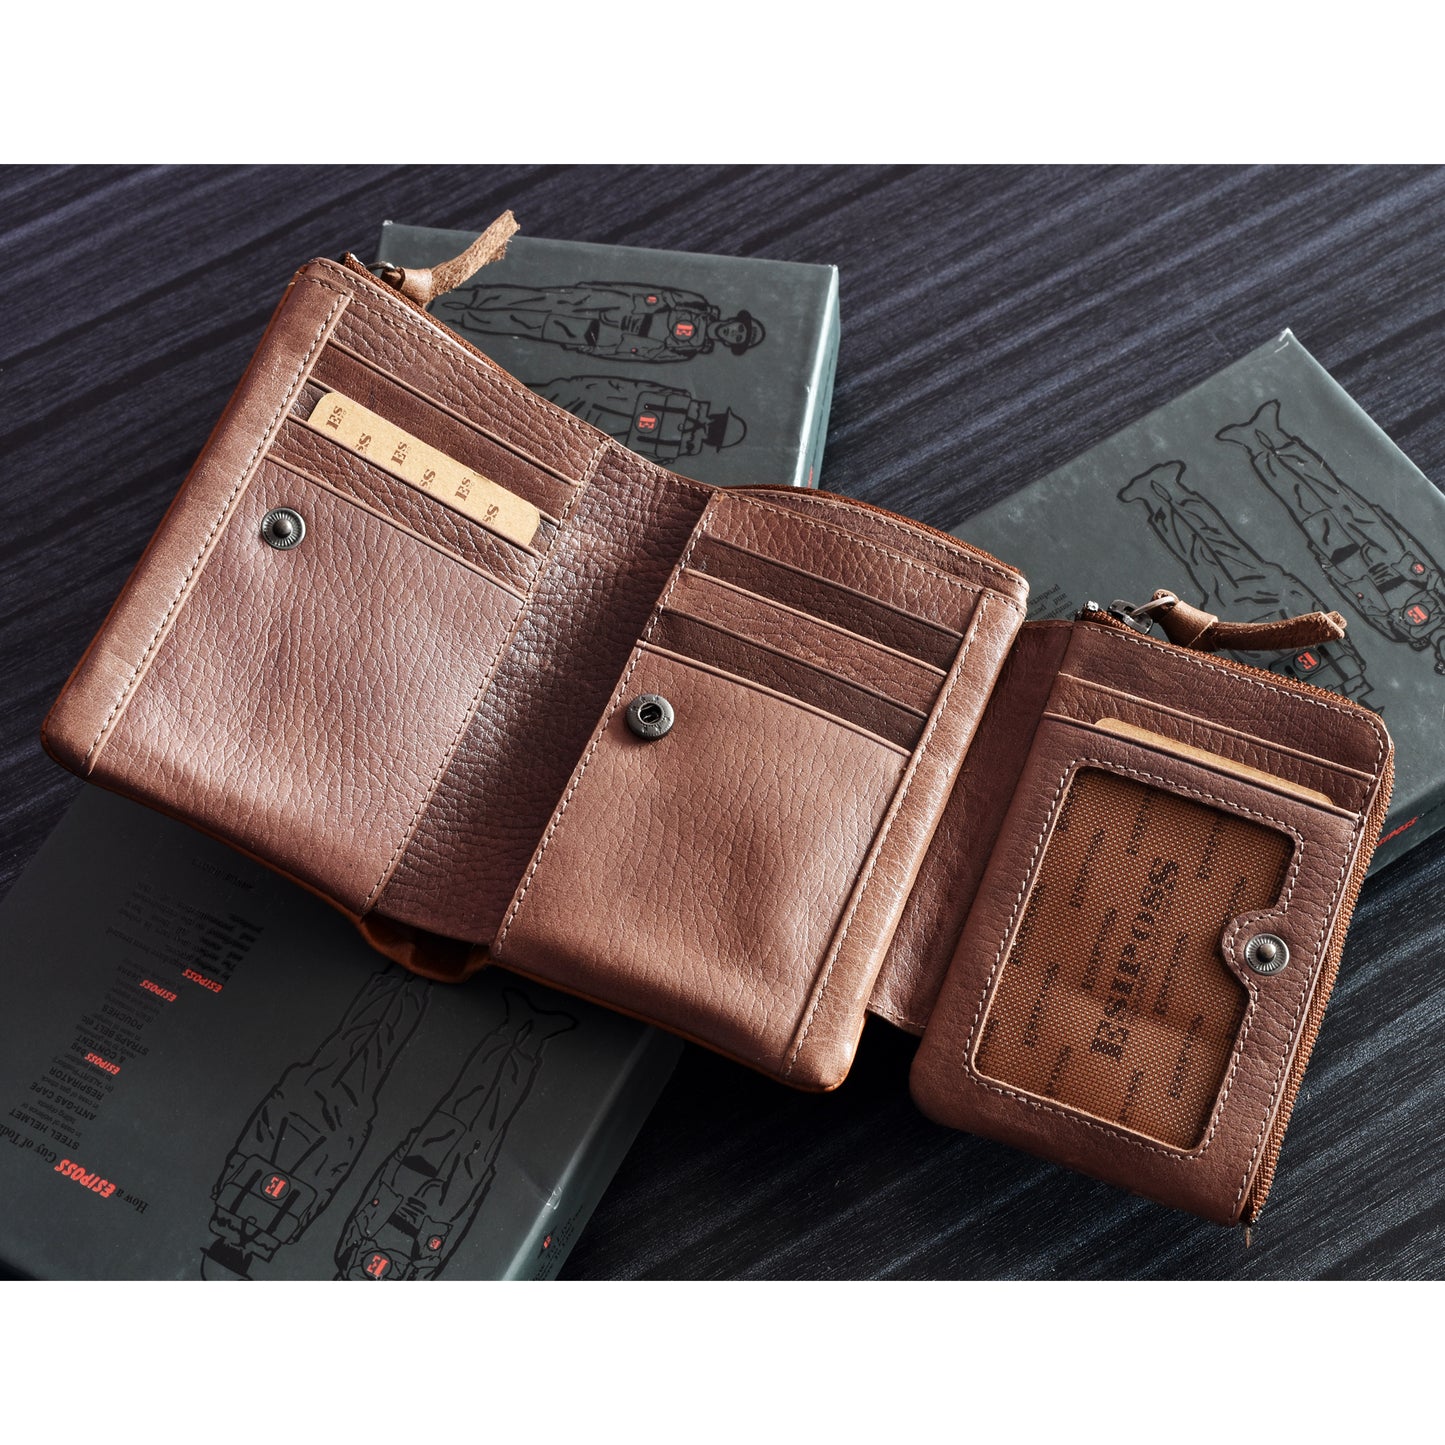 Original Esiposs Leather Wallet | Pocket Size Wallet | EPS 35